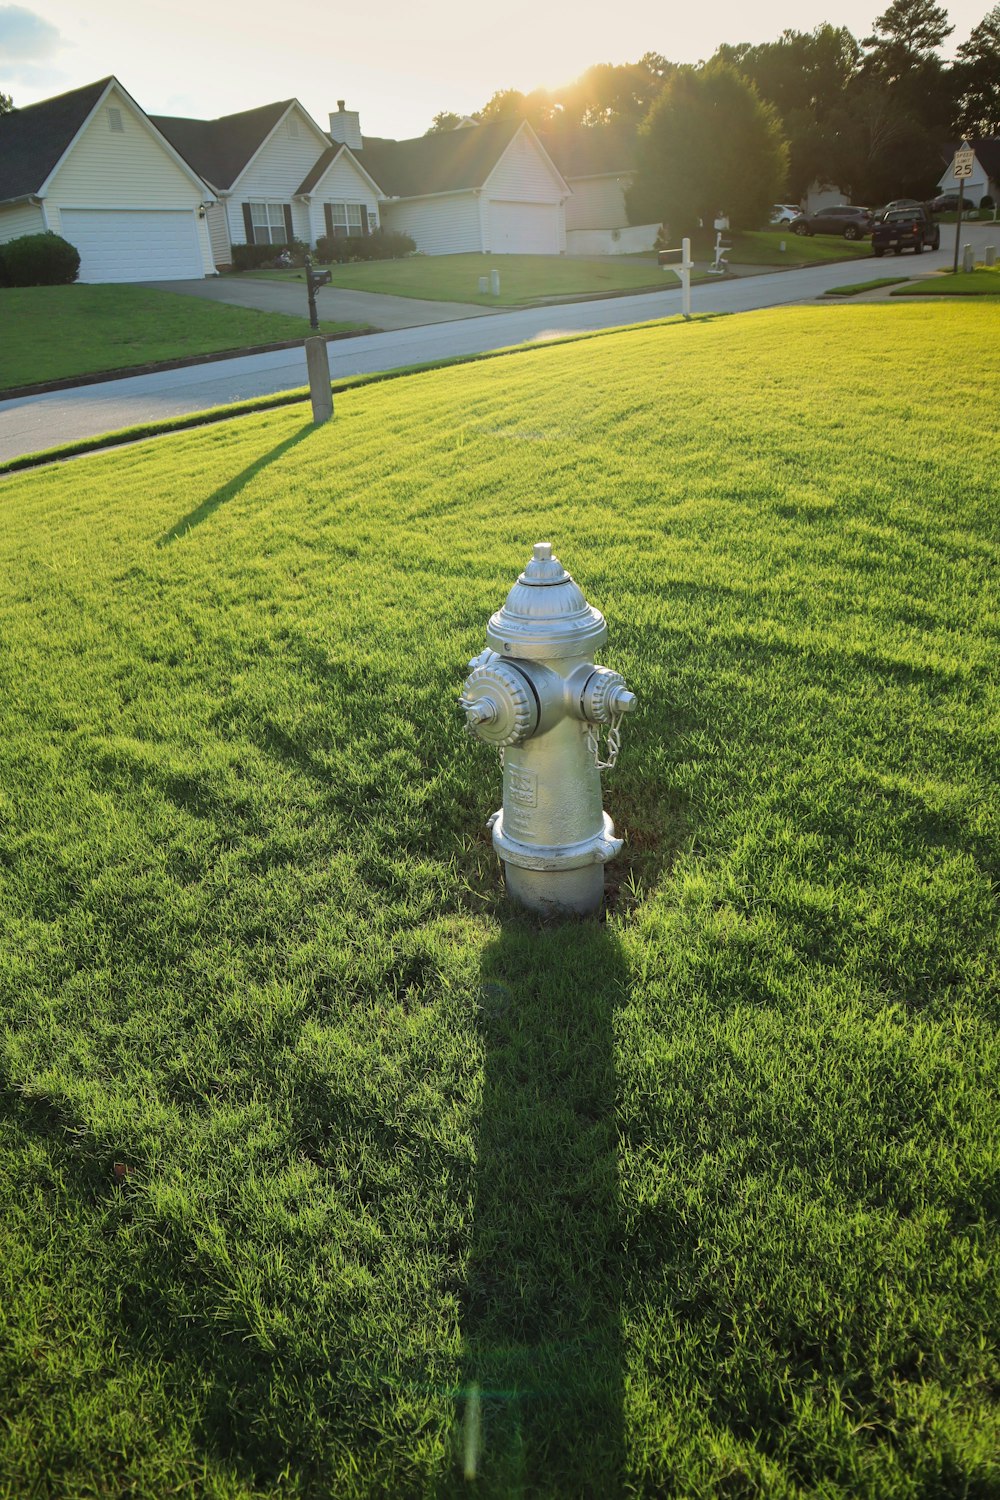 a fire hydrant in a grassy field